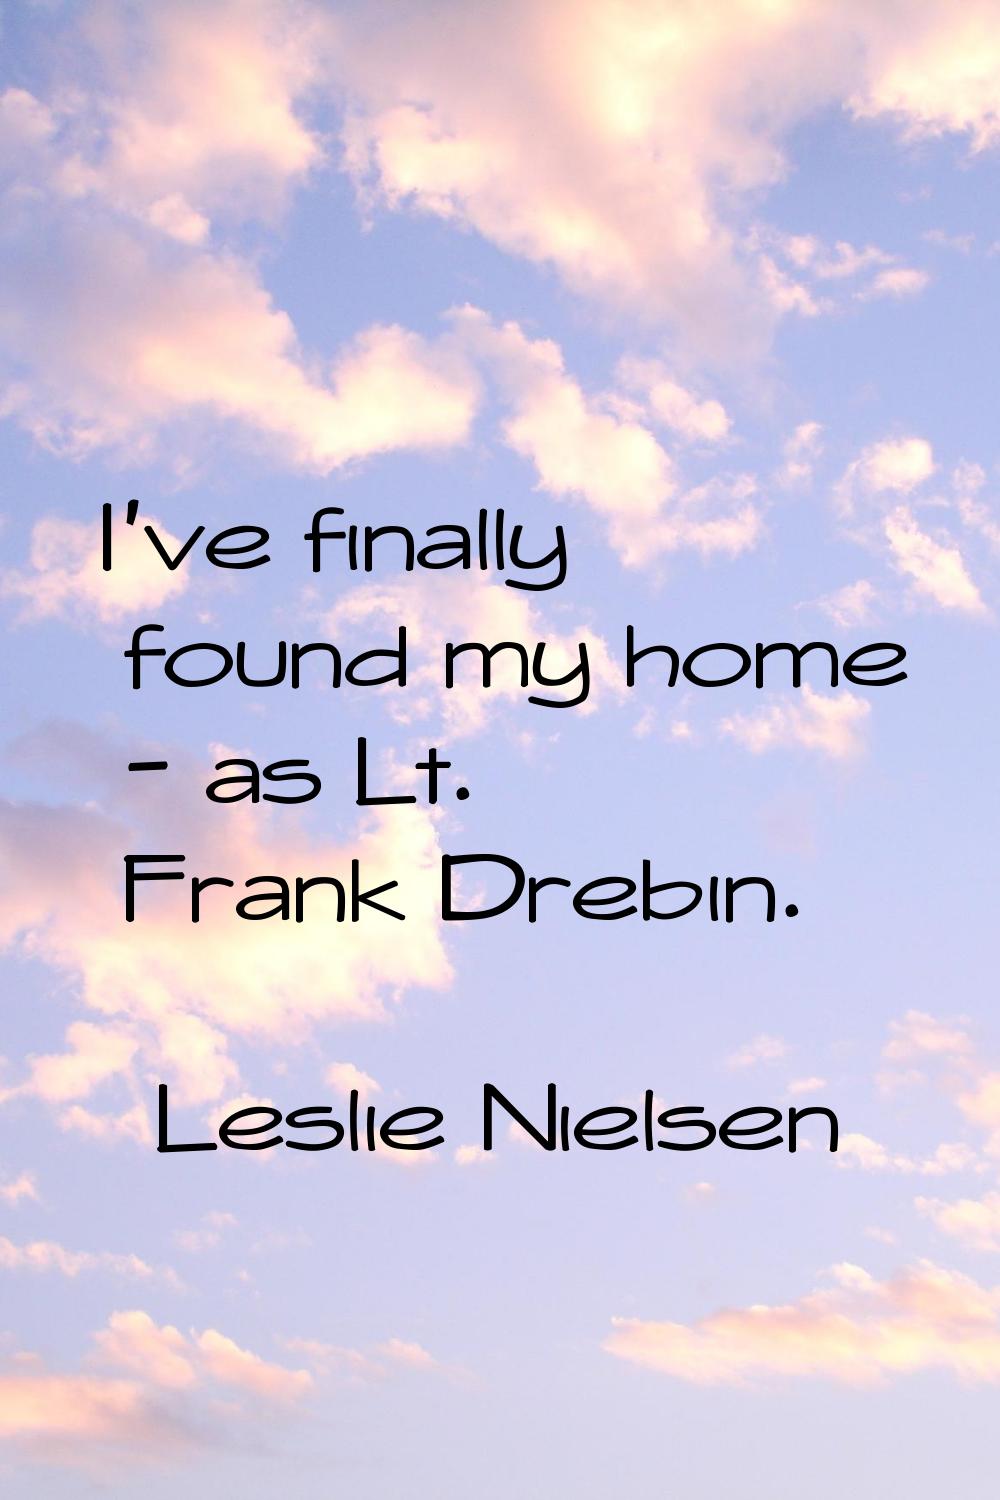 I've finally found my home - as Lt. Frank Drebin.